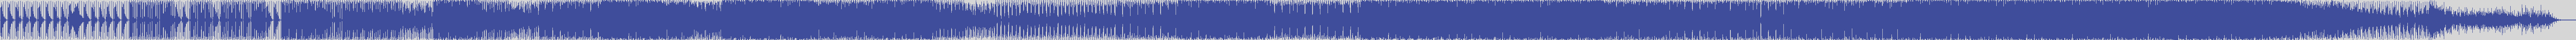 atomic_recordings [AR020] Justin Berkmann - Waqhad [Original Mix] audio wave form